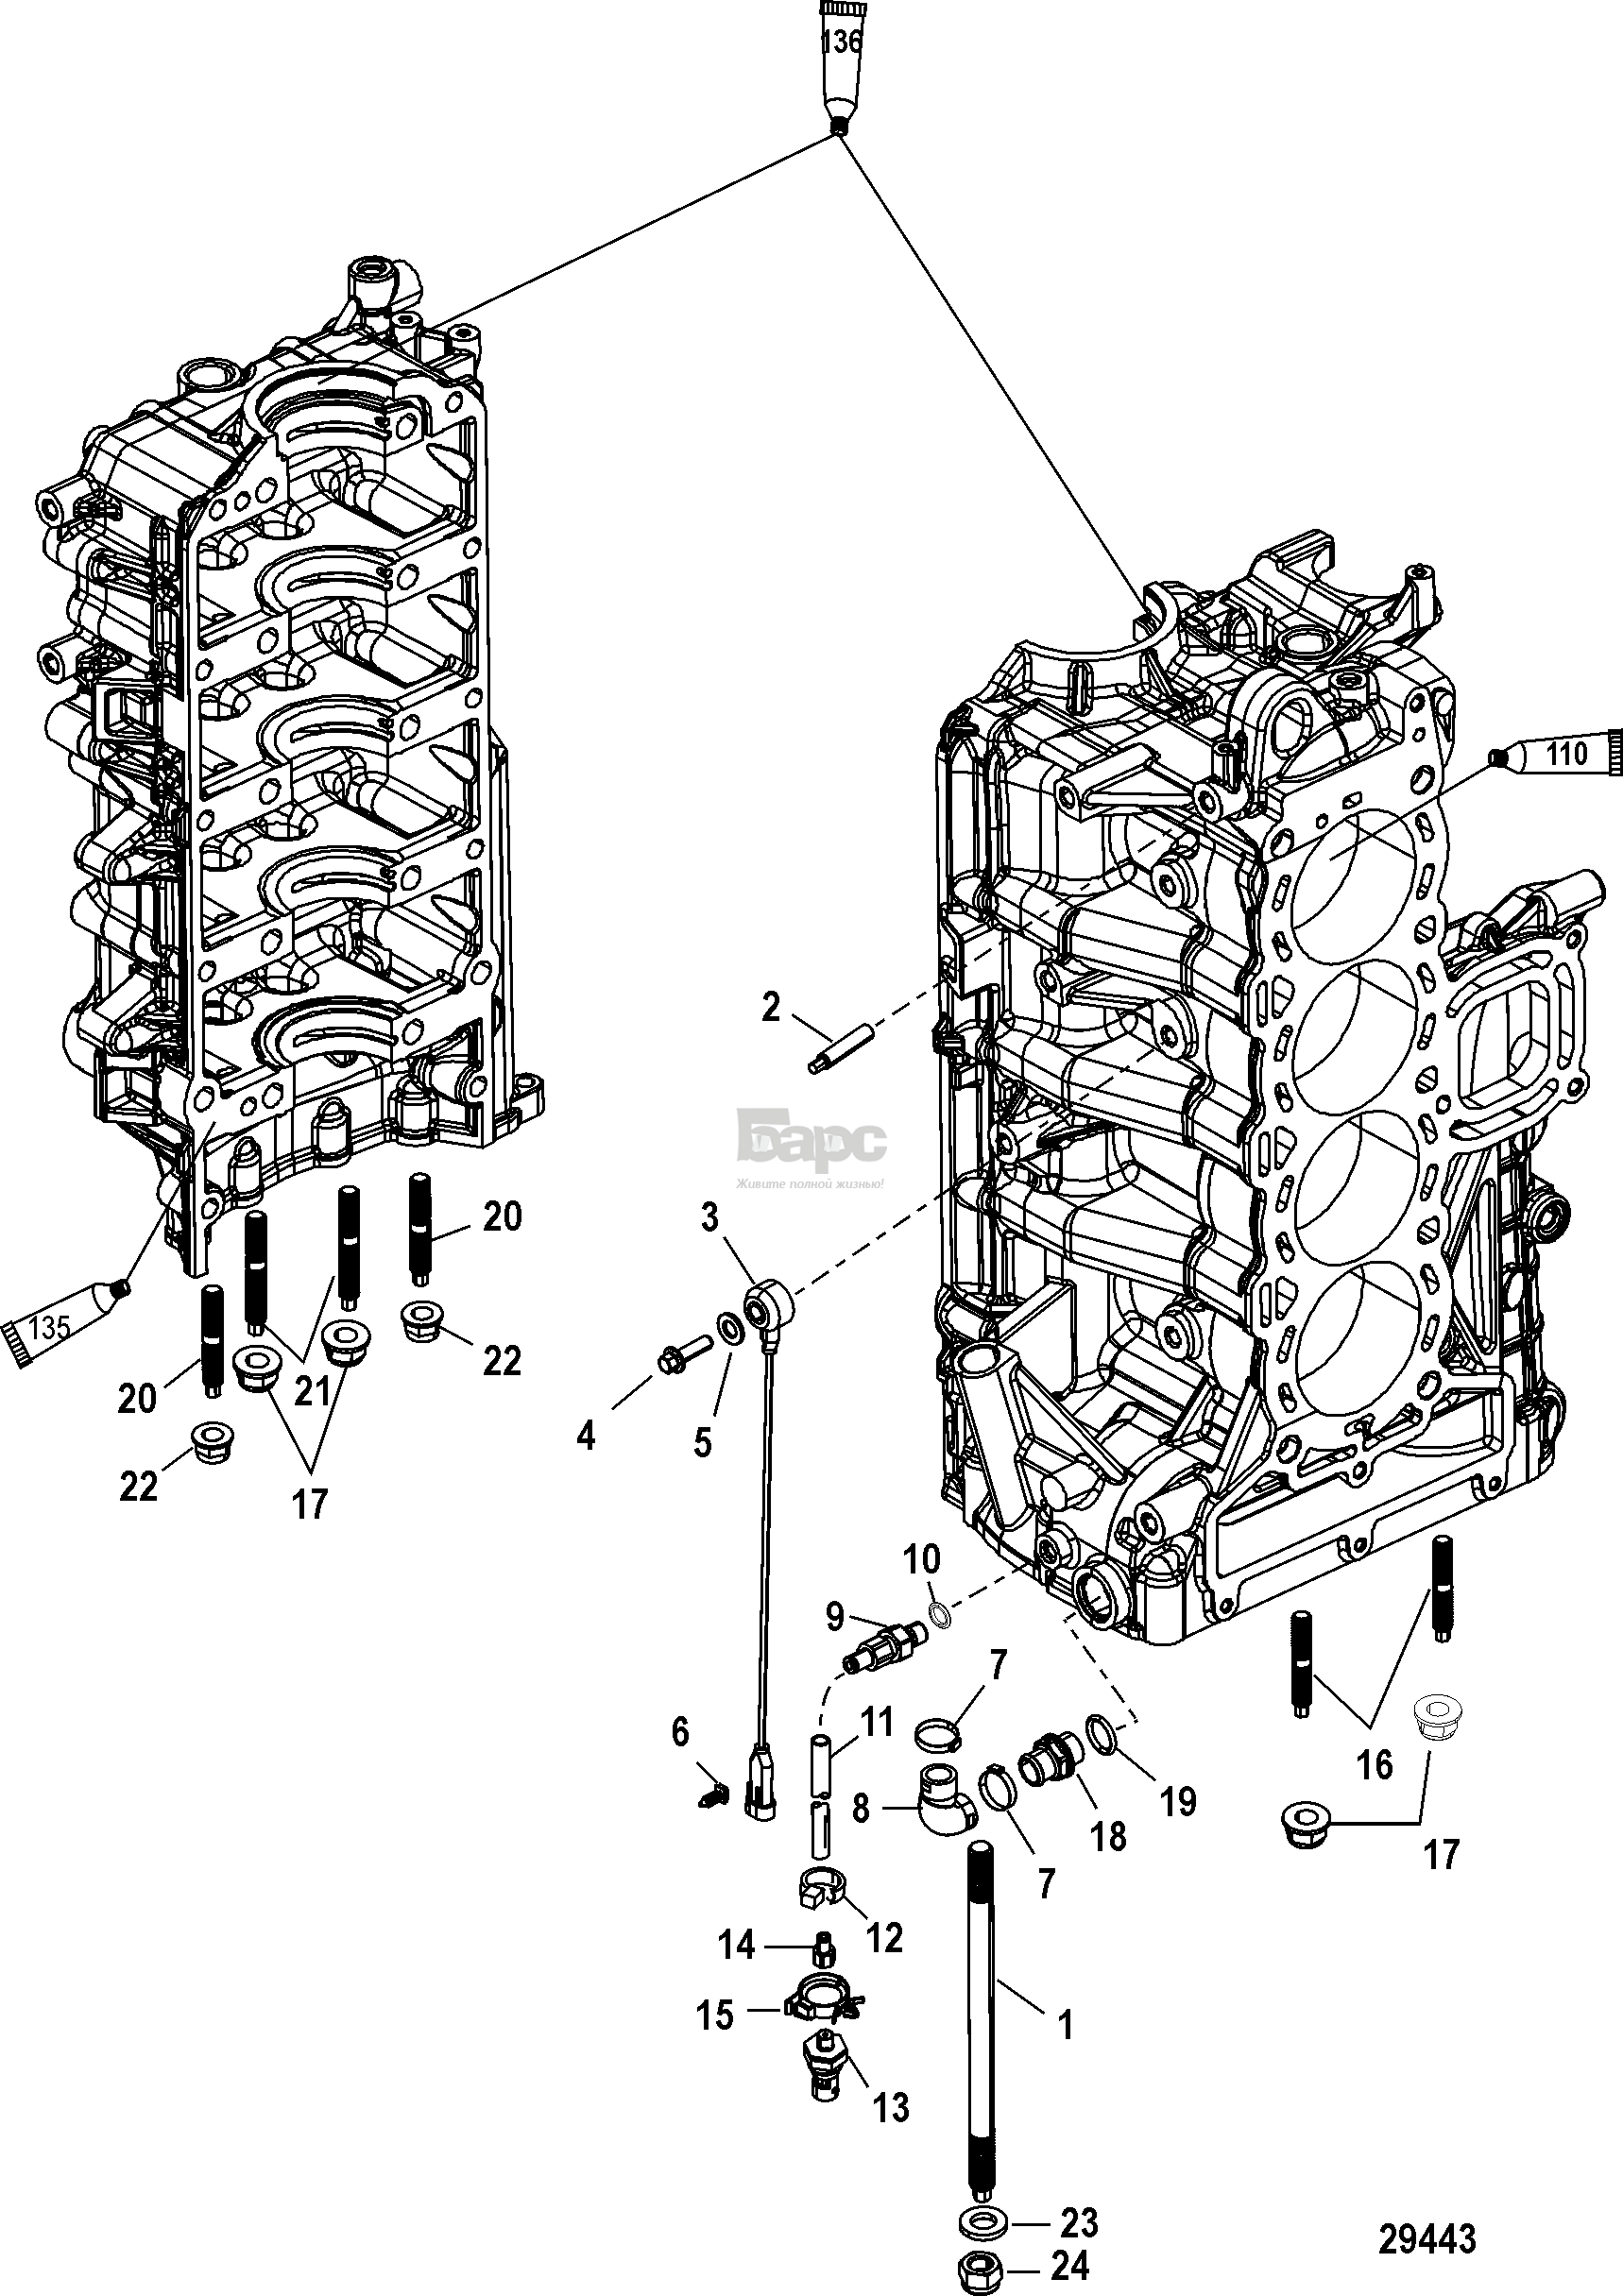 Port Cylinder Block Components